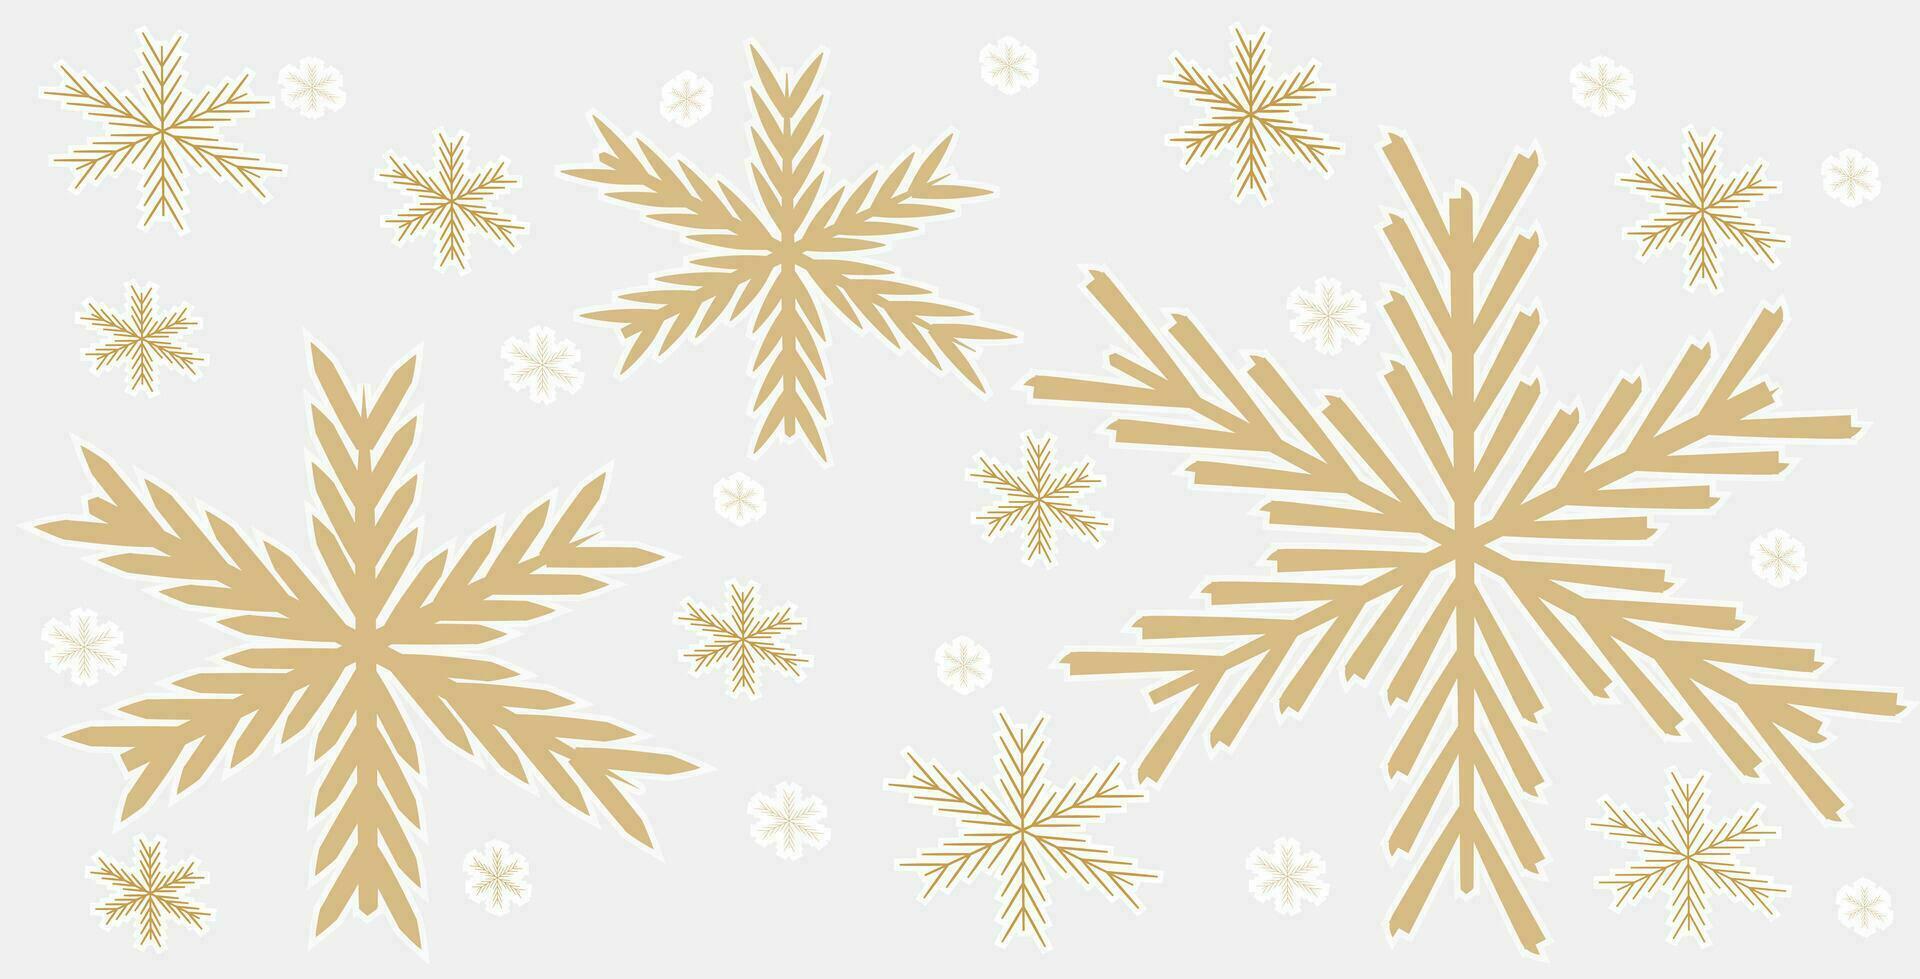 jul bakgrund med snöflingor, vektor illustration